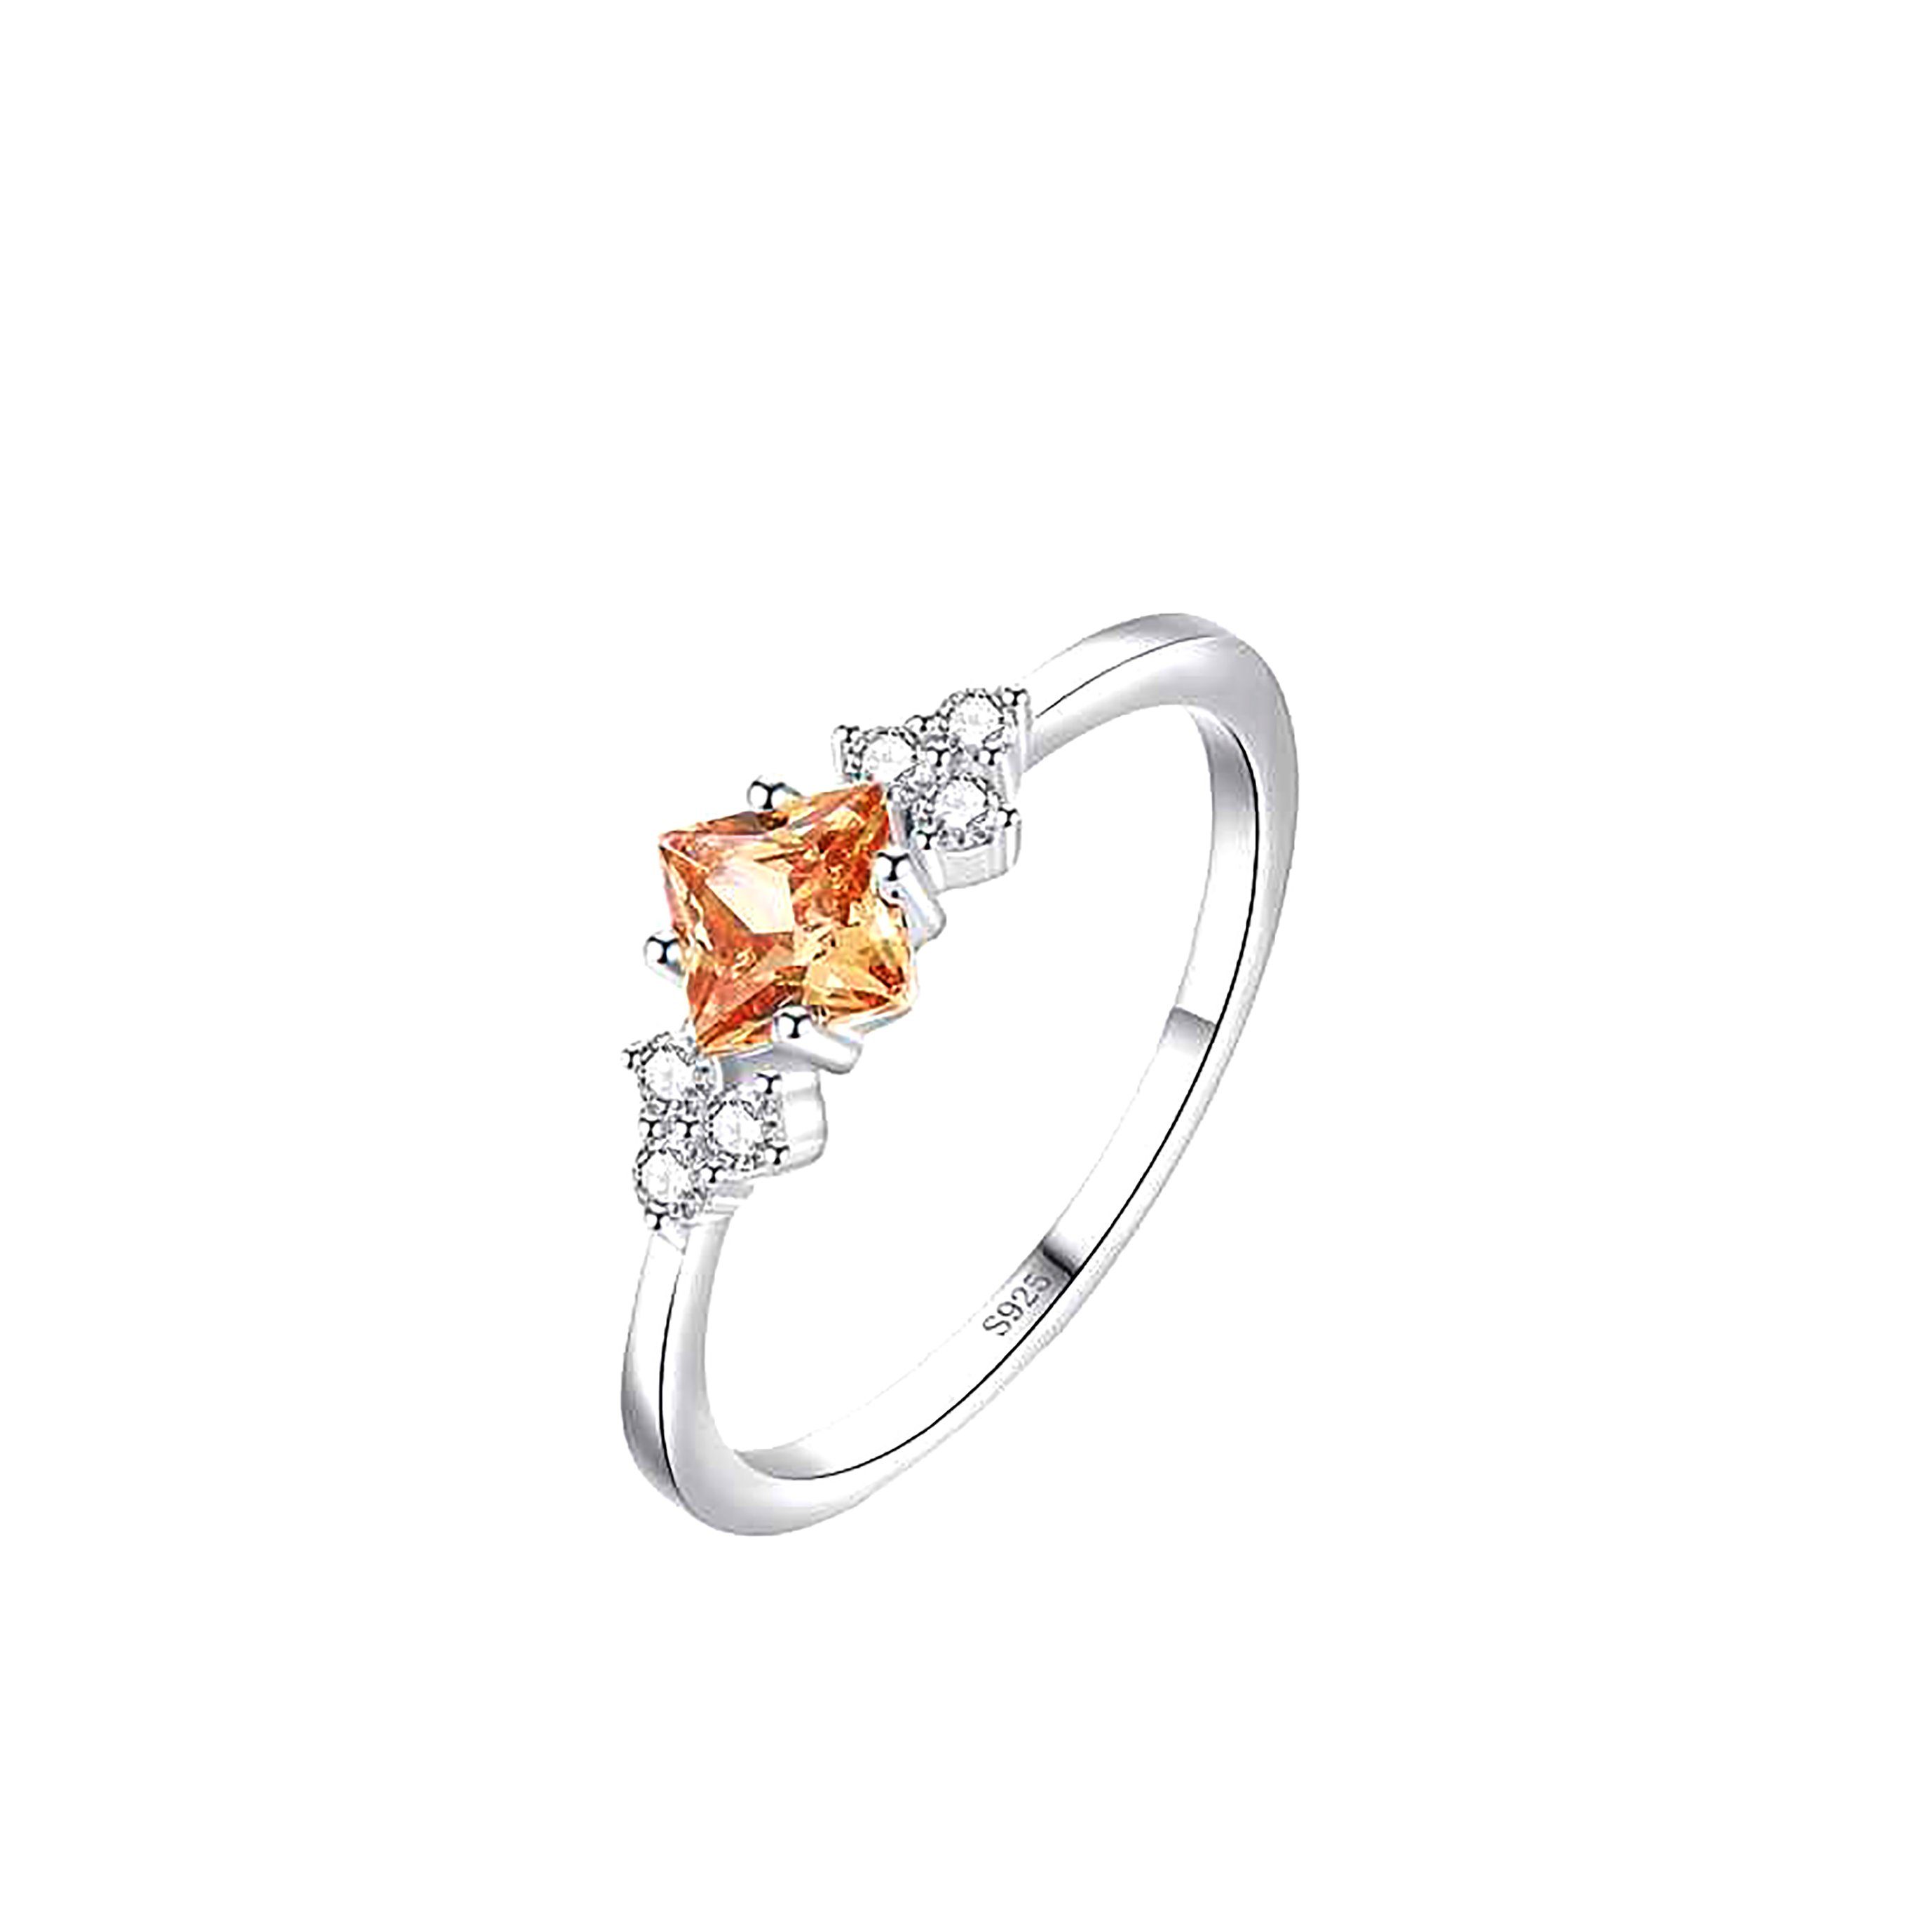 Tapferer Ping Fingerring Kreativer Silber Super Sparkle Zirkonia Ring für Frauen